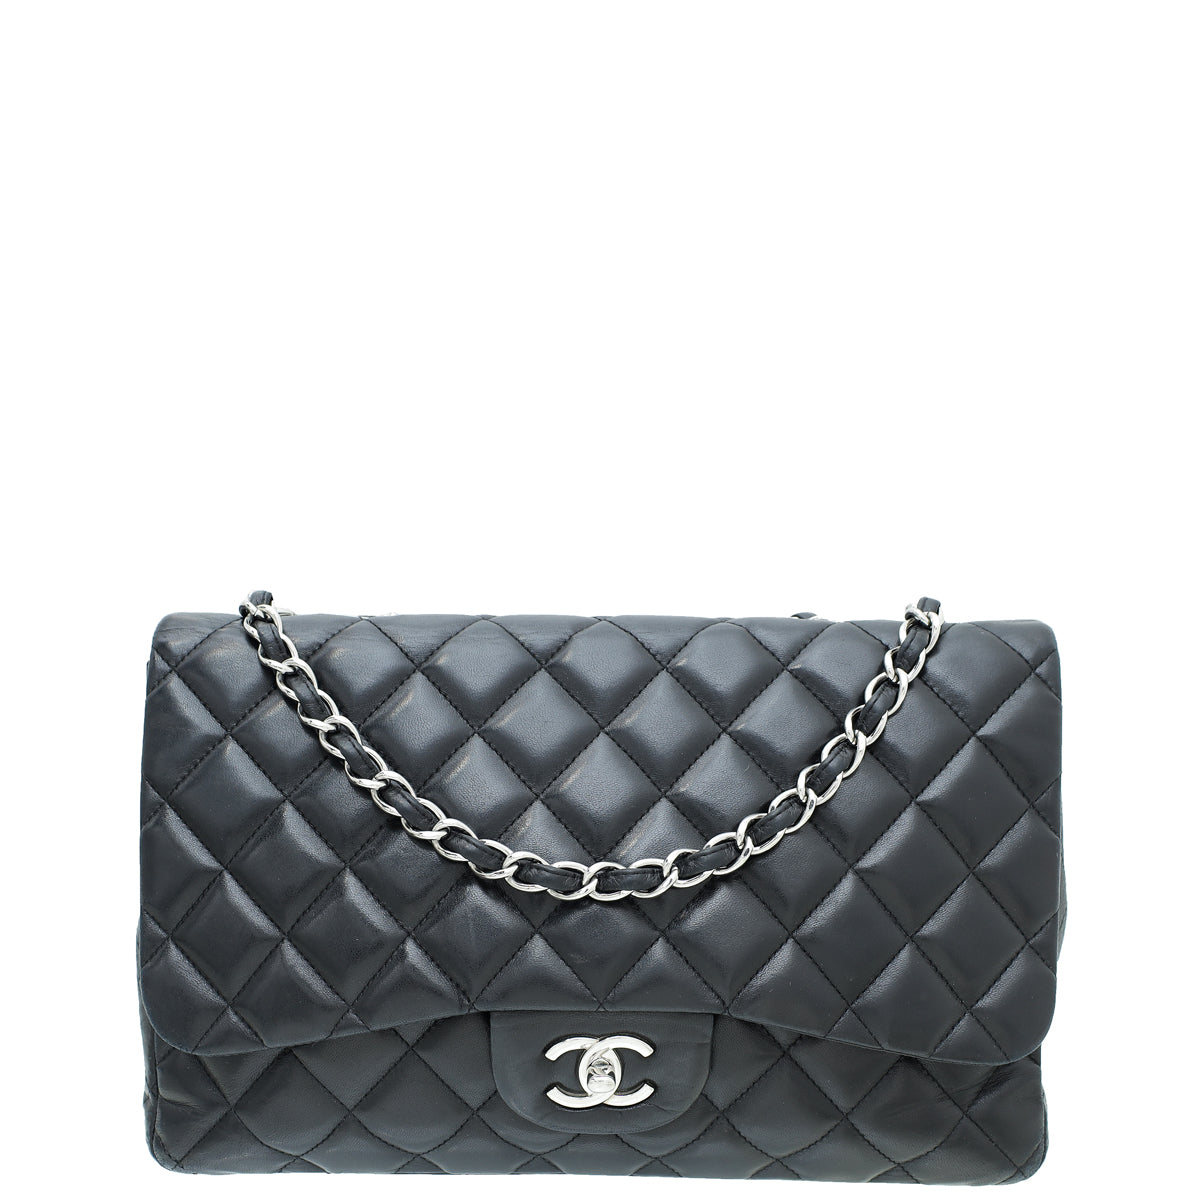 Chanel Black Quilted Caviar Leather Jumbo Classic Single Flap Handbag